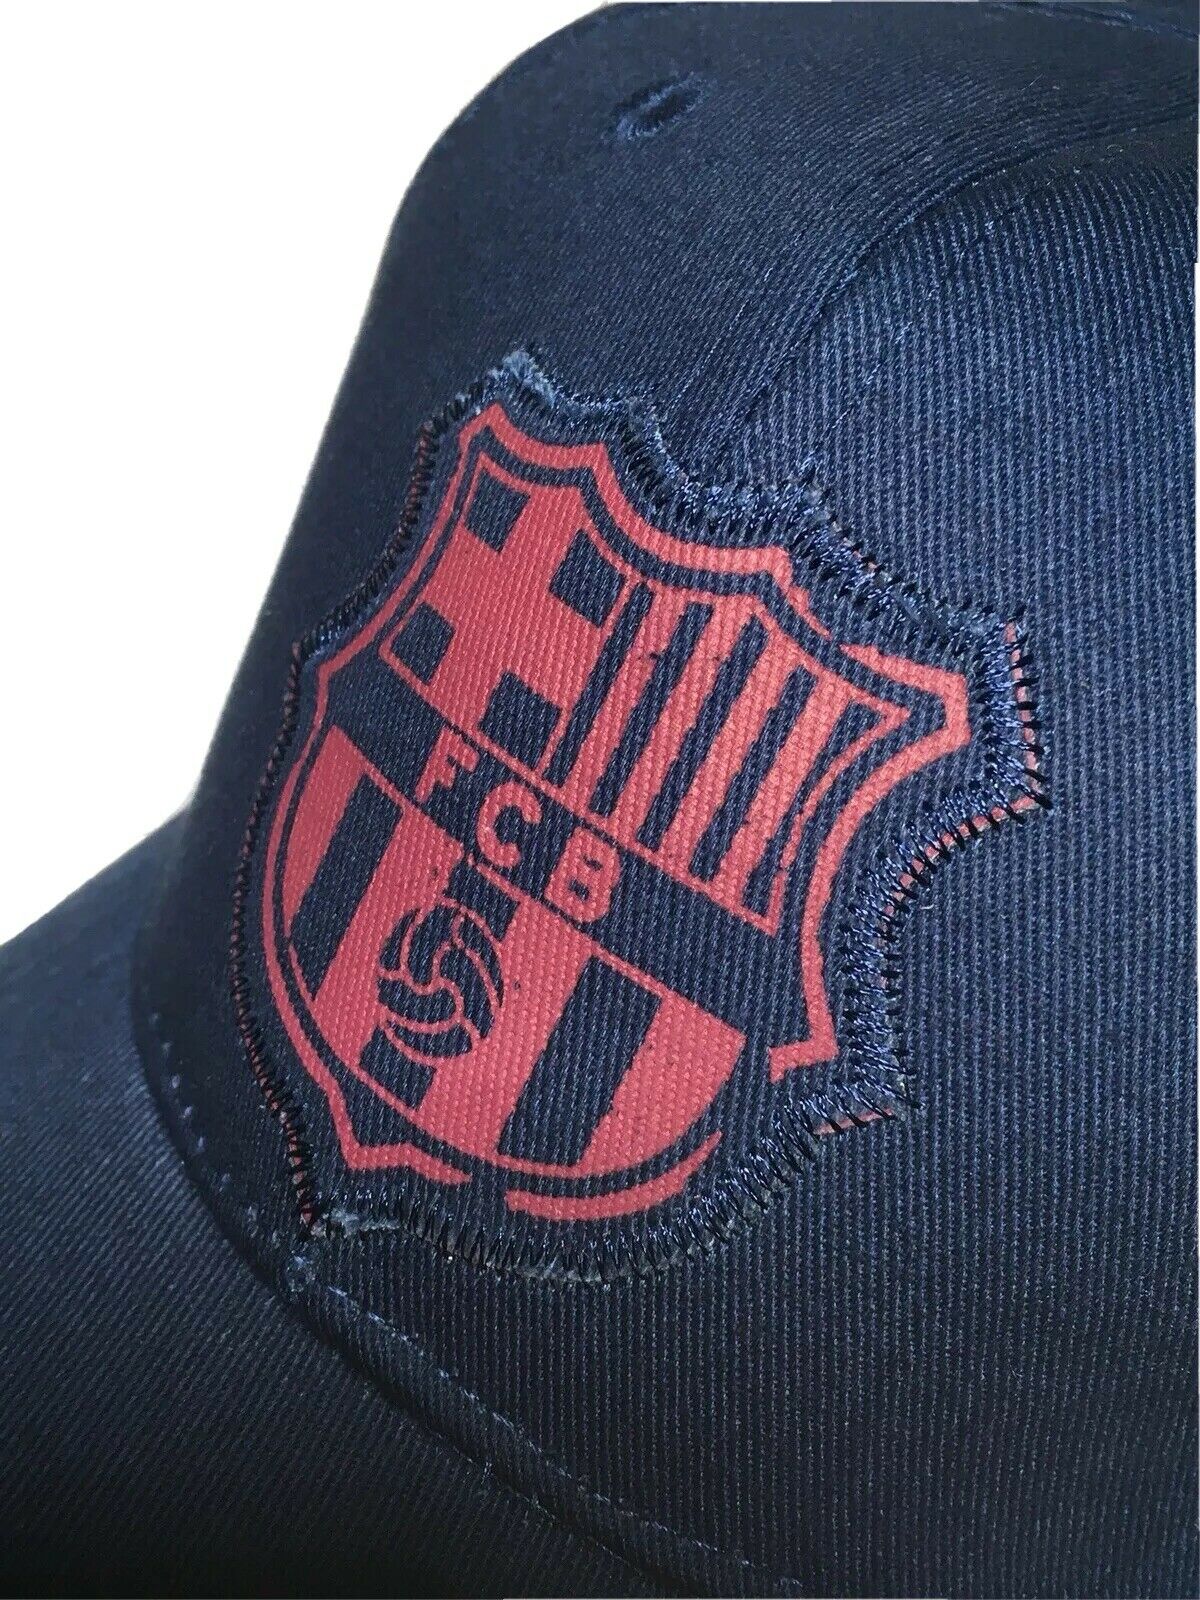 Barcelona Snapback Logo Hat - Navy Blue